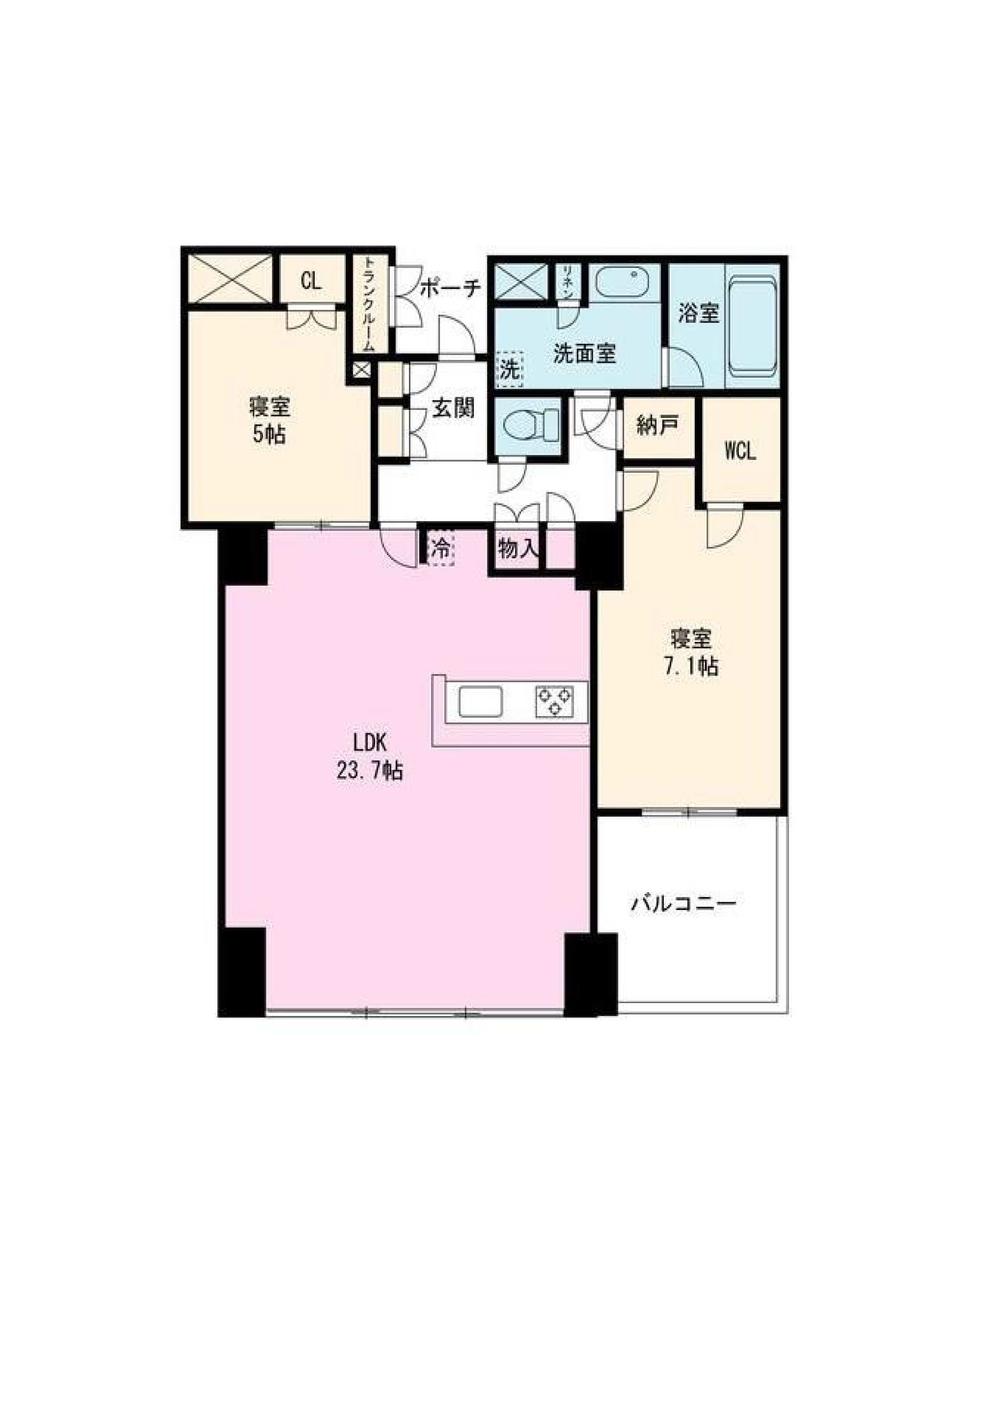 Floor plan. 2LDK + S (storeroom), Price 69,800,000 yen, Occupied area 80.72 sq m , Balcony area 5.35 sq m